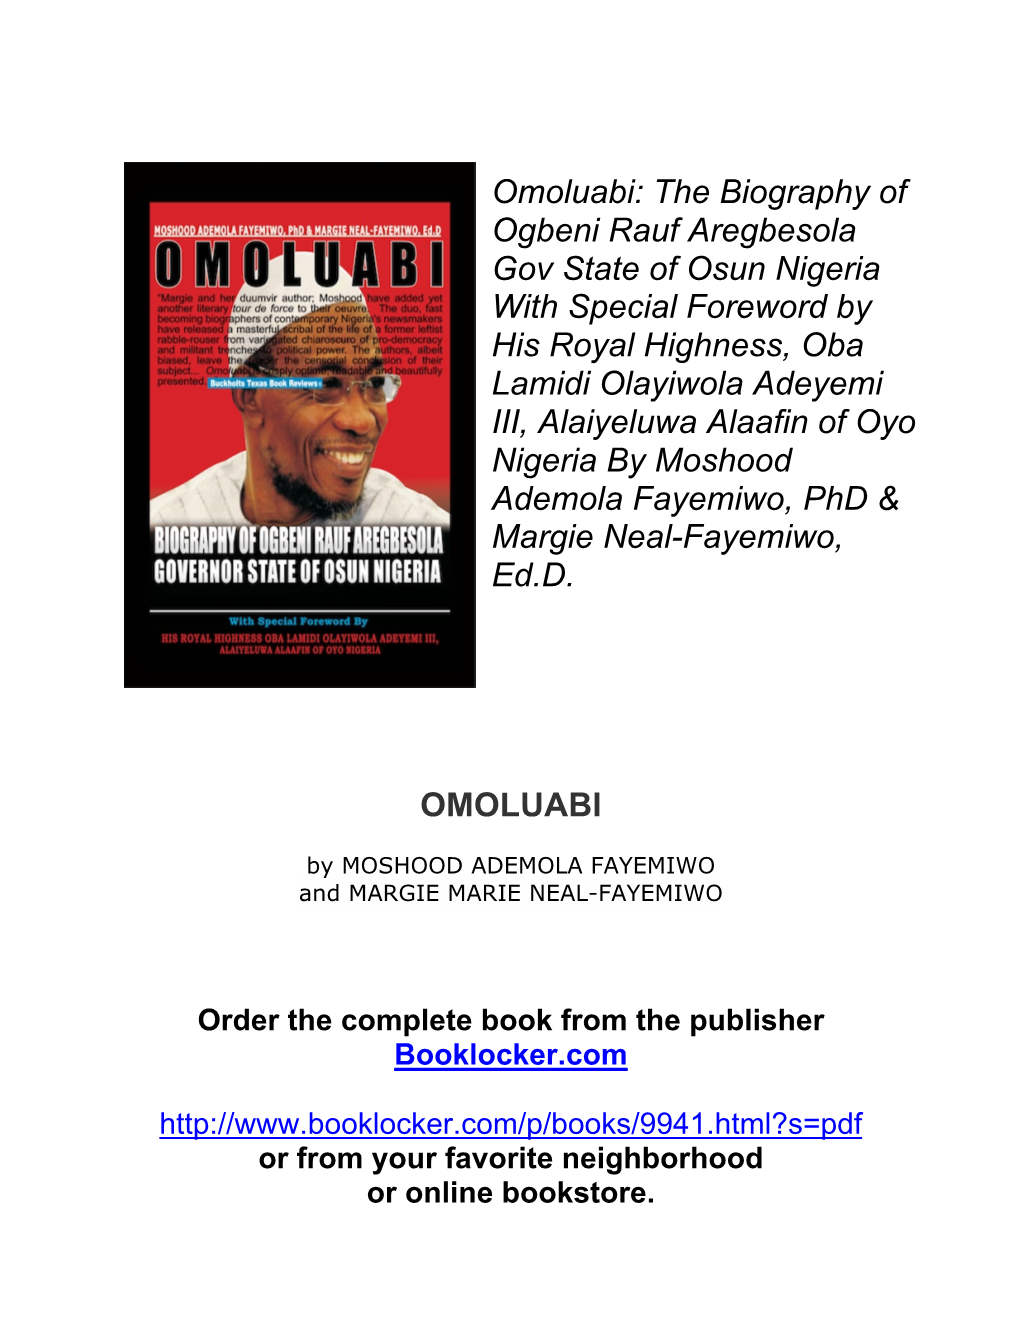 The Biography of Ogbeni Rauf Aregbesola Gov